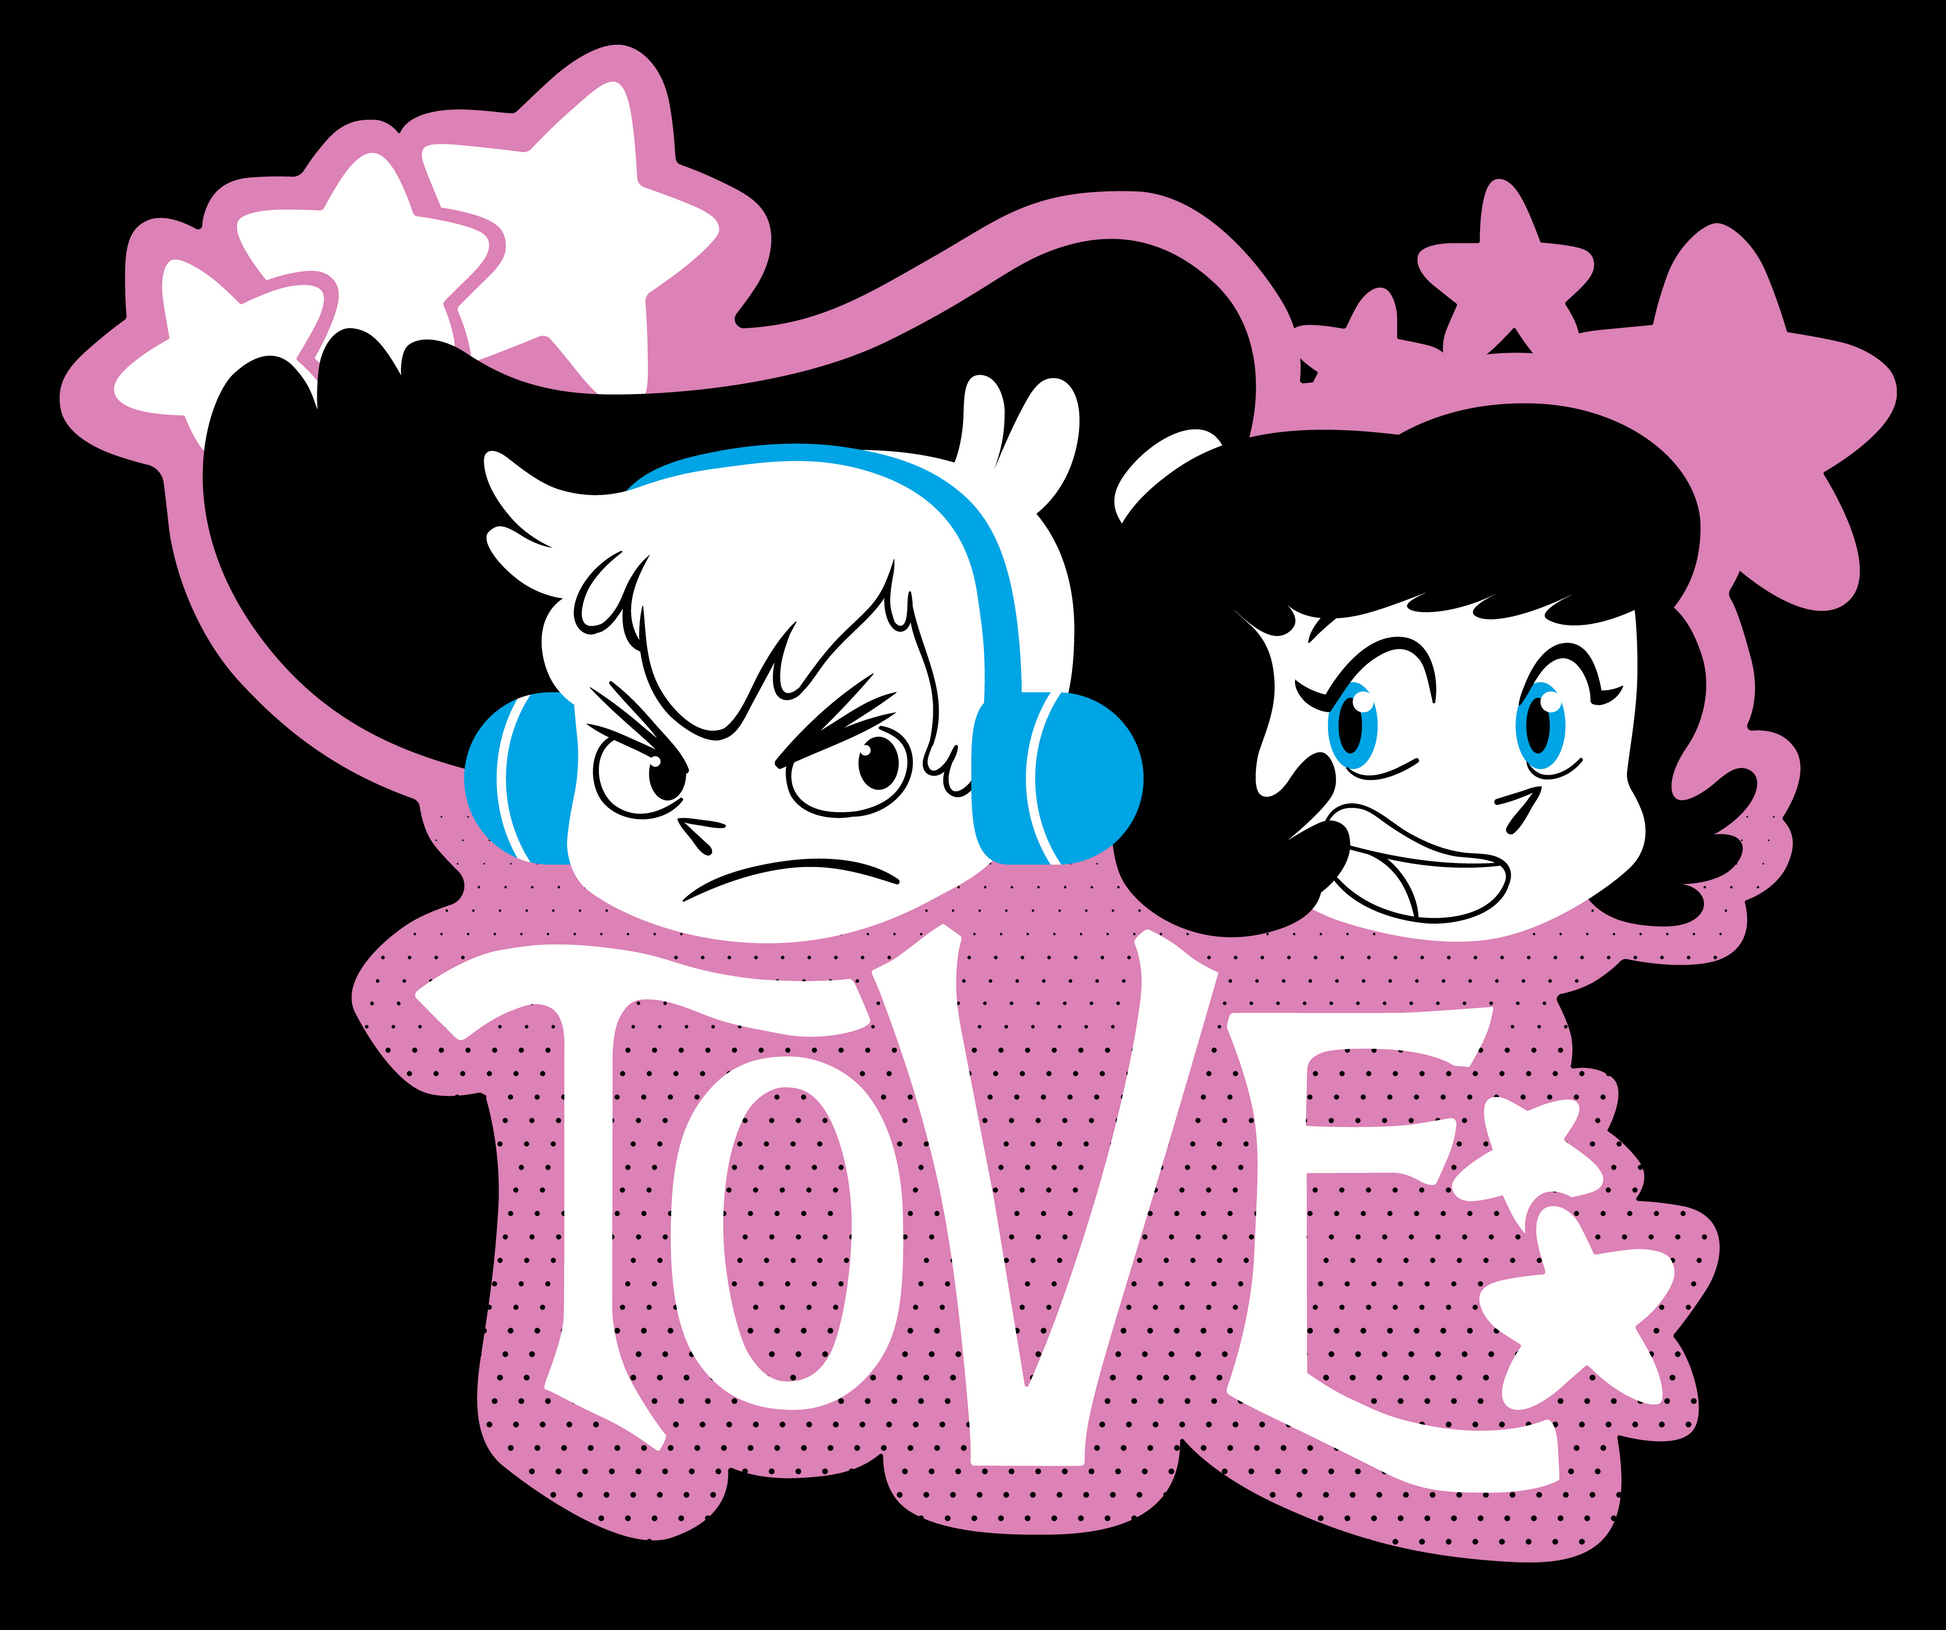 Tove Logo Tee (Unisex) from Tove - Webcomic Merchandise 